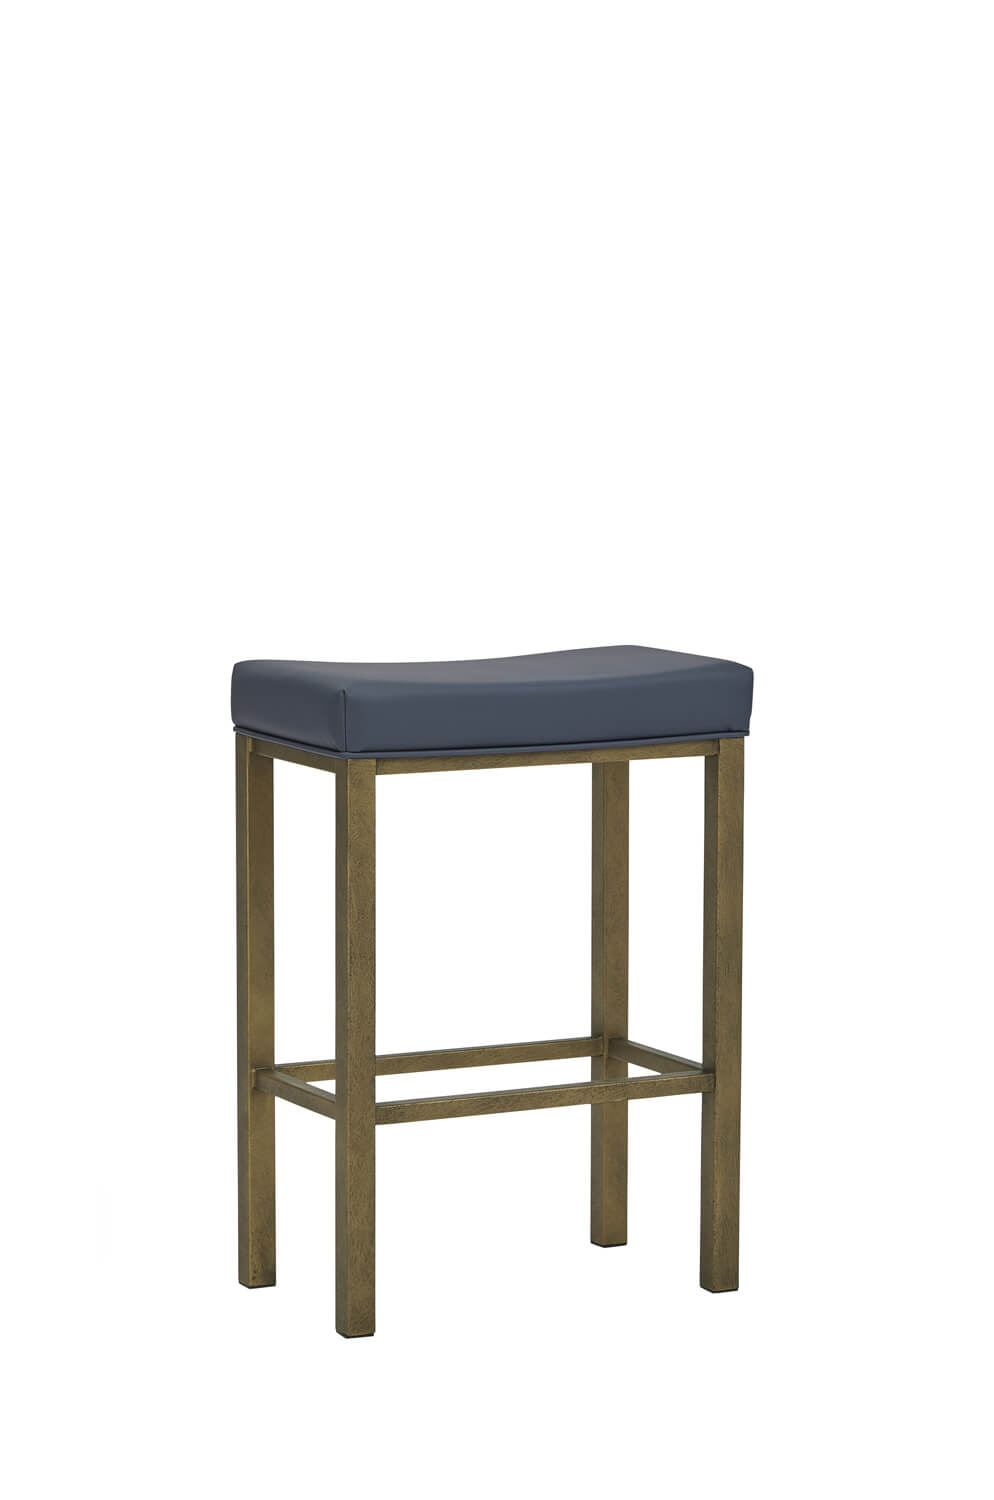 https://barstoolcomforts.com/wp-content/uploads/2018/08/wesley-allen-seattle-backless-saddle-stool-in-brass-bisque-metal-finish-blue-vinyl-cushion.jpg